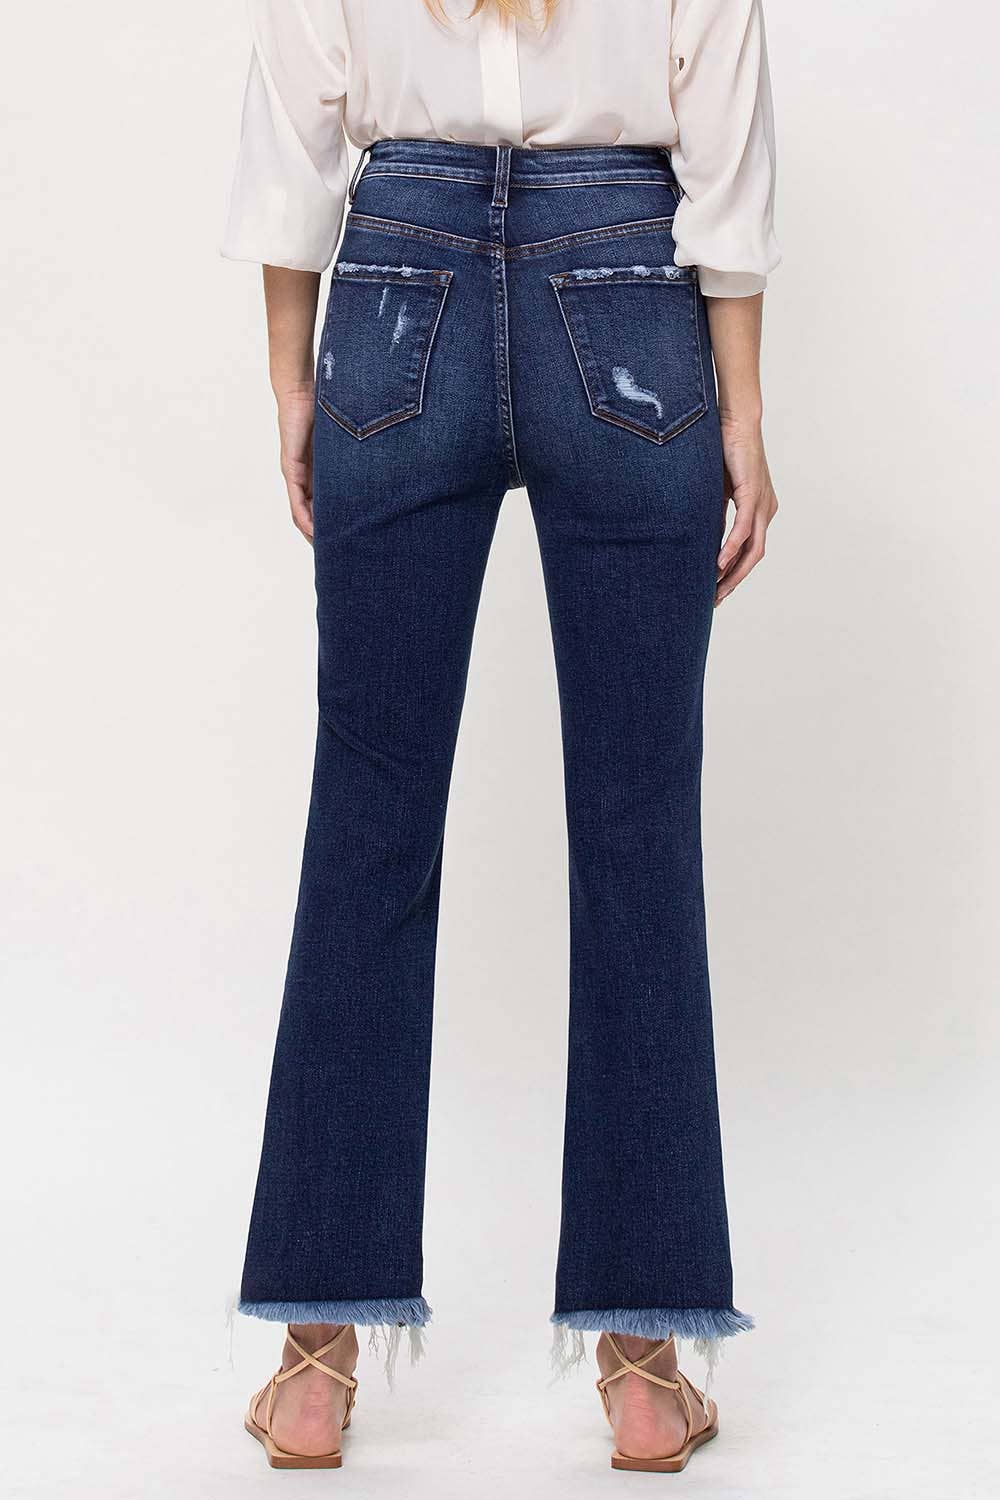 Daylin Jeans